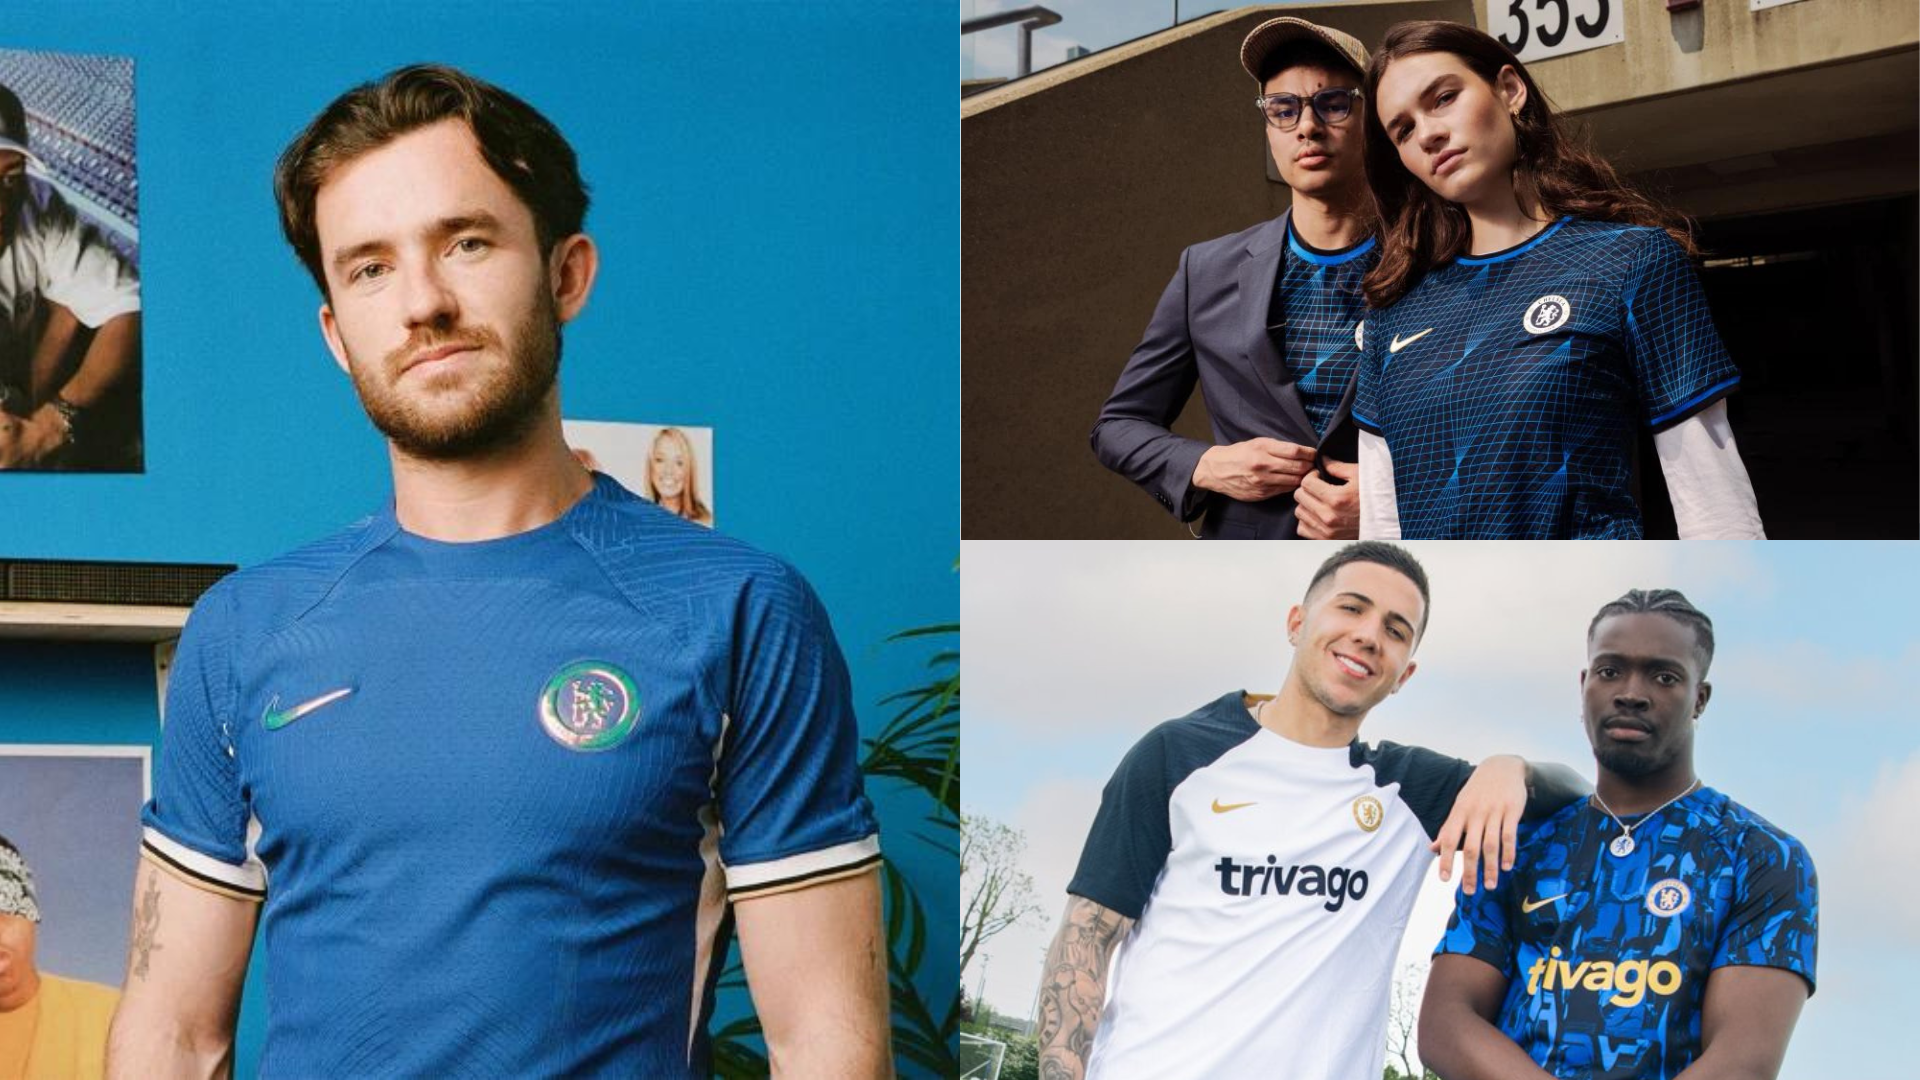 Chelsea FC Kits, Chelsea Shirt, Home & Away Kit